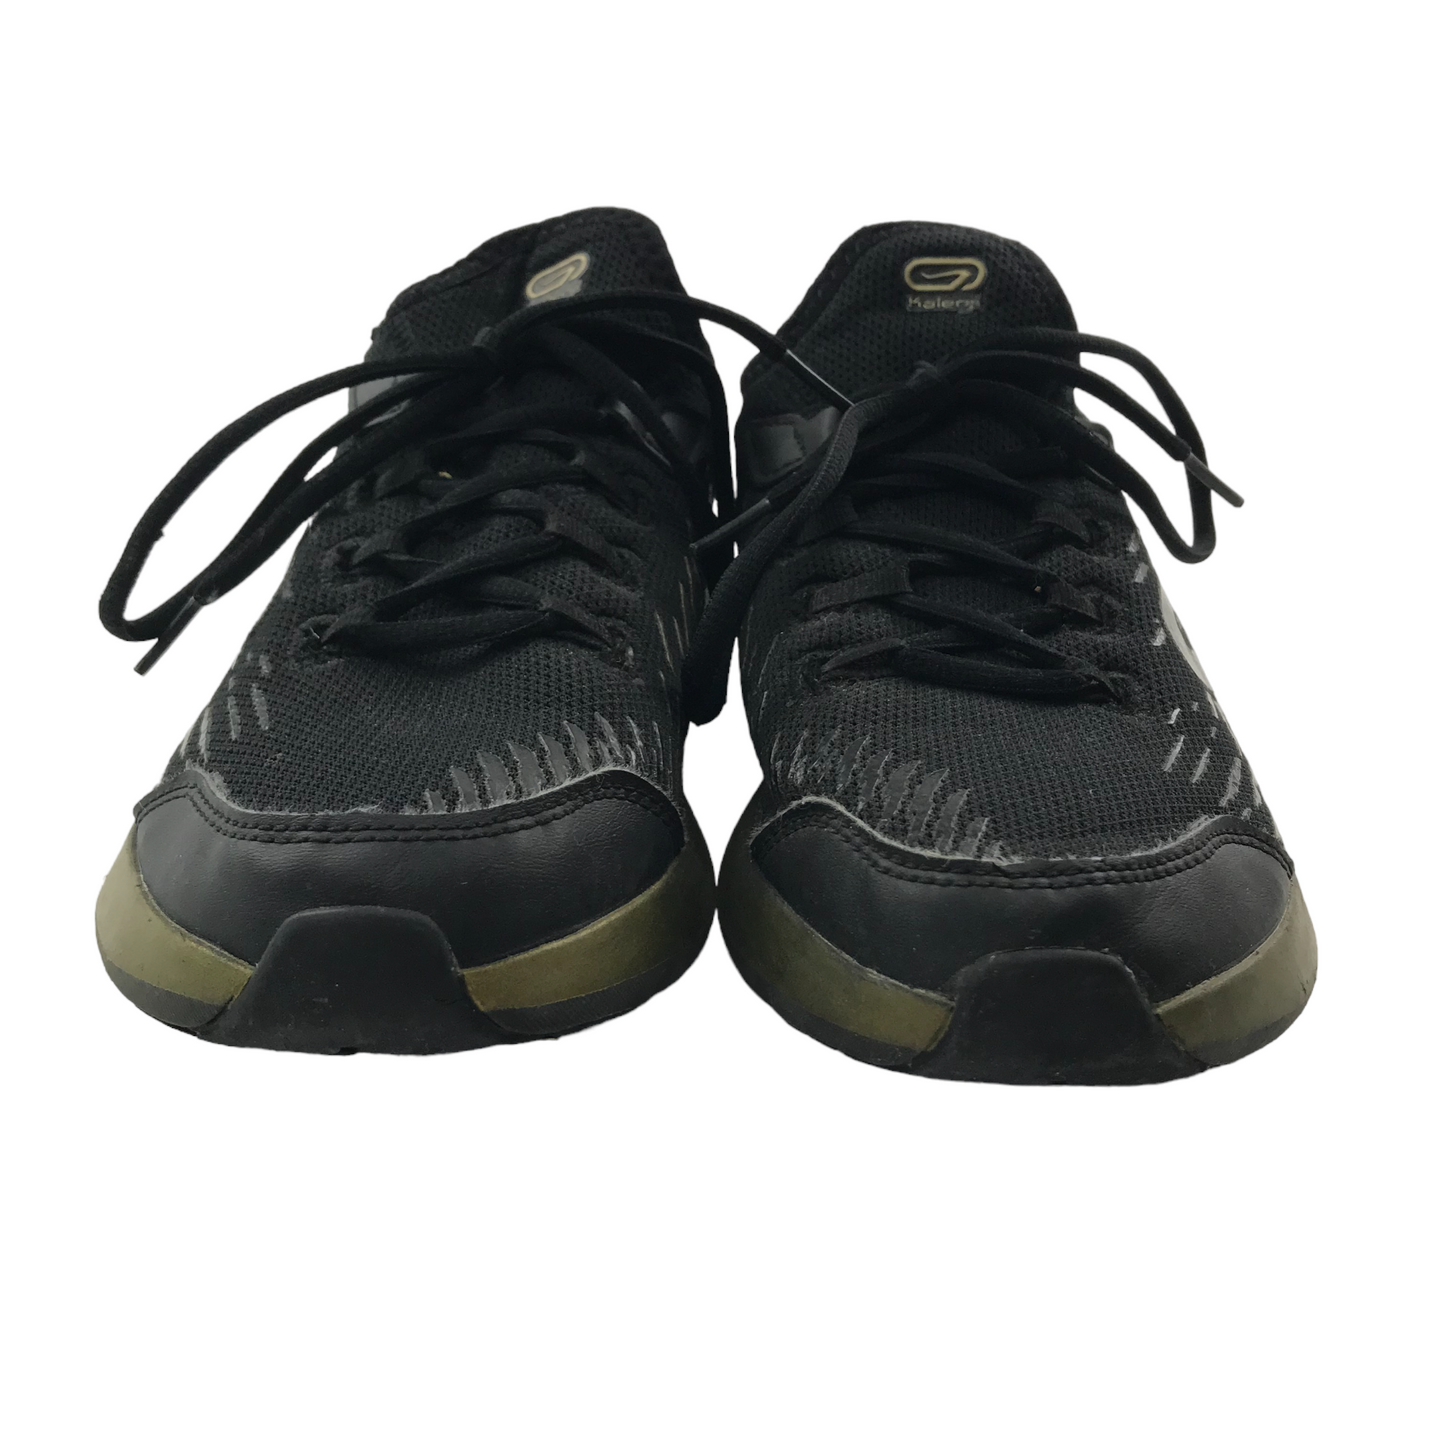 Kalenji Black Running Trainers Shoe Size 5.5